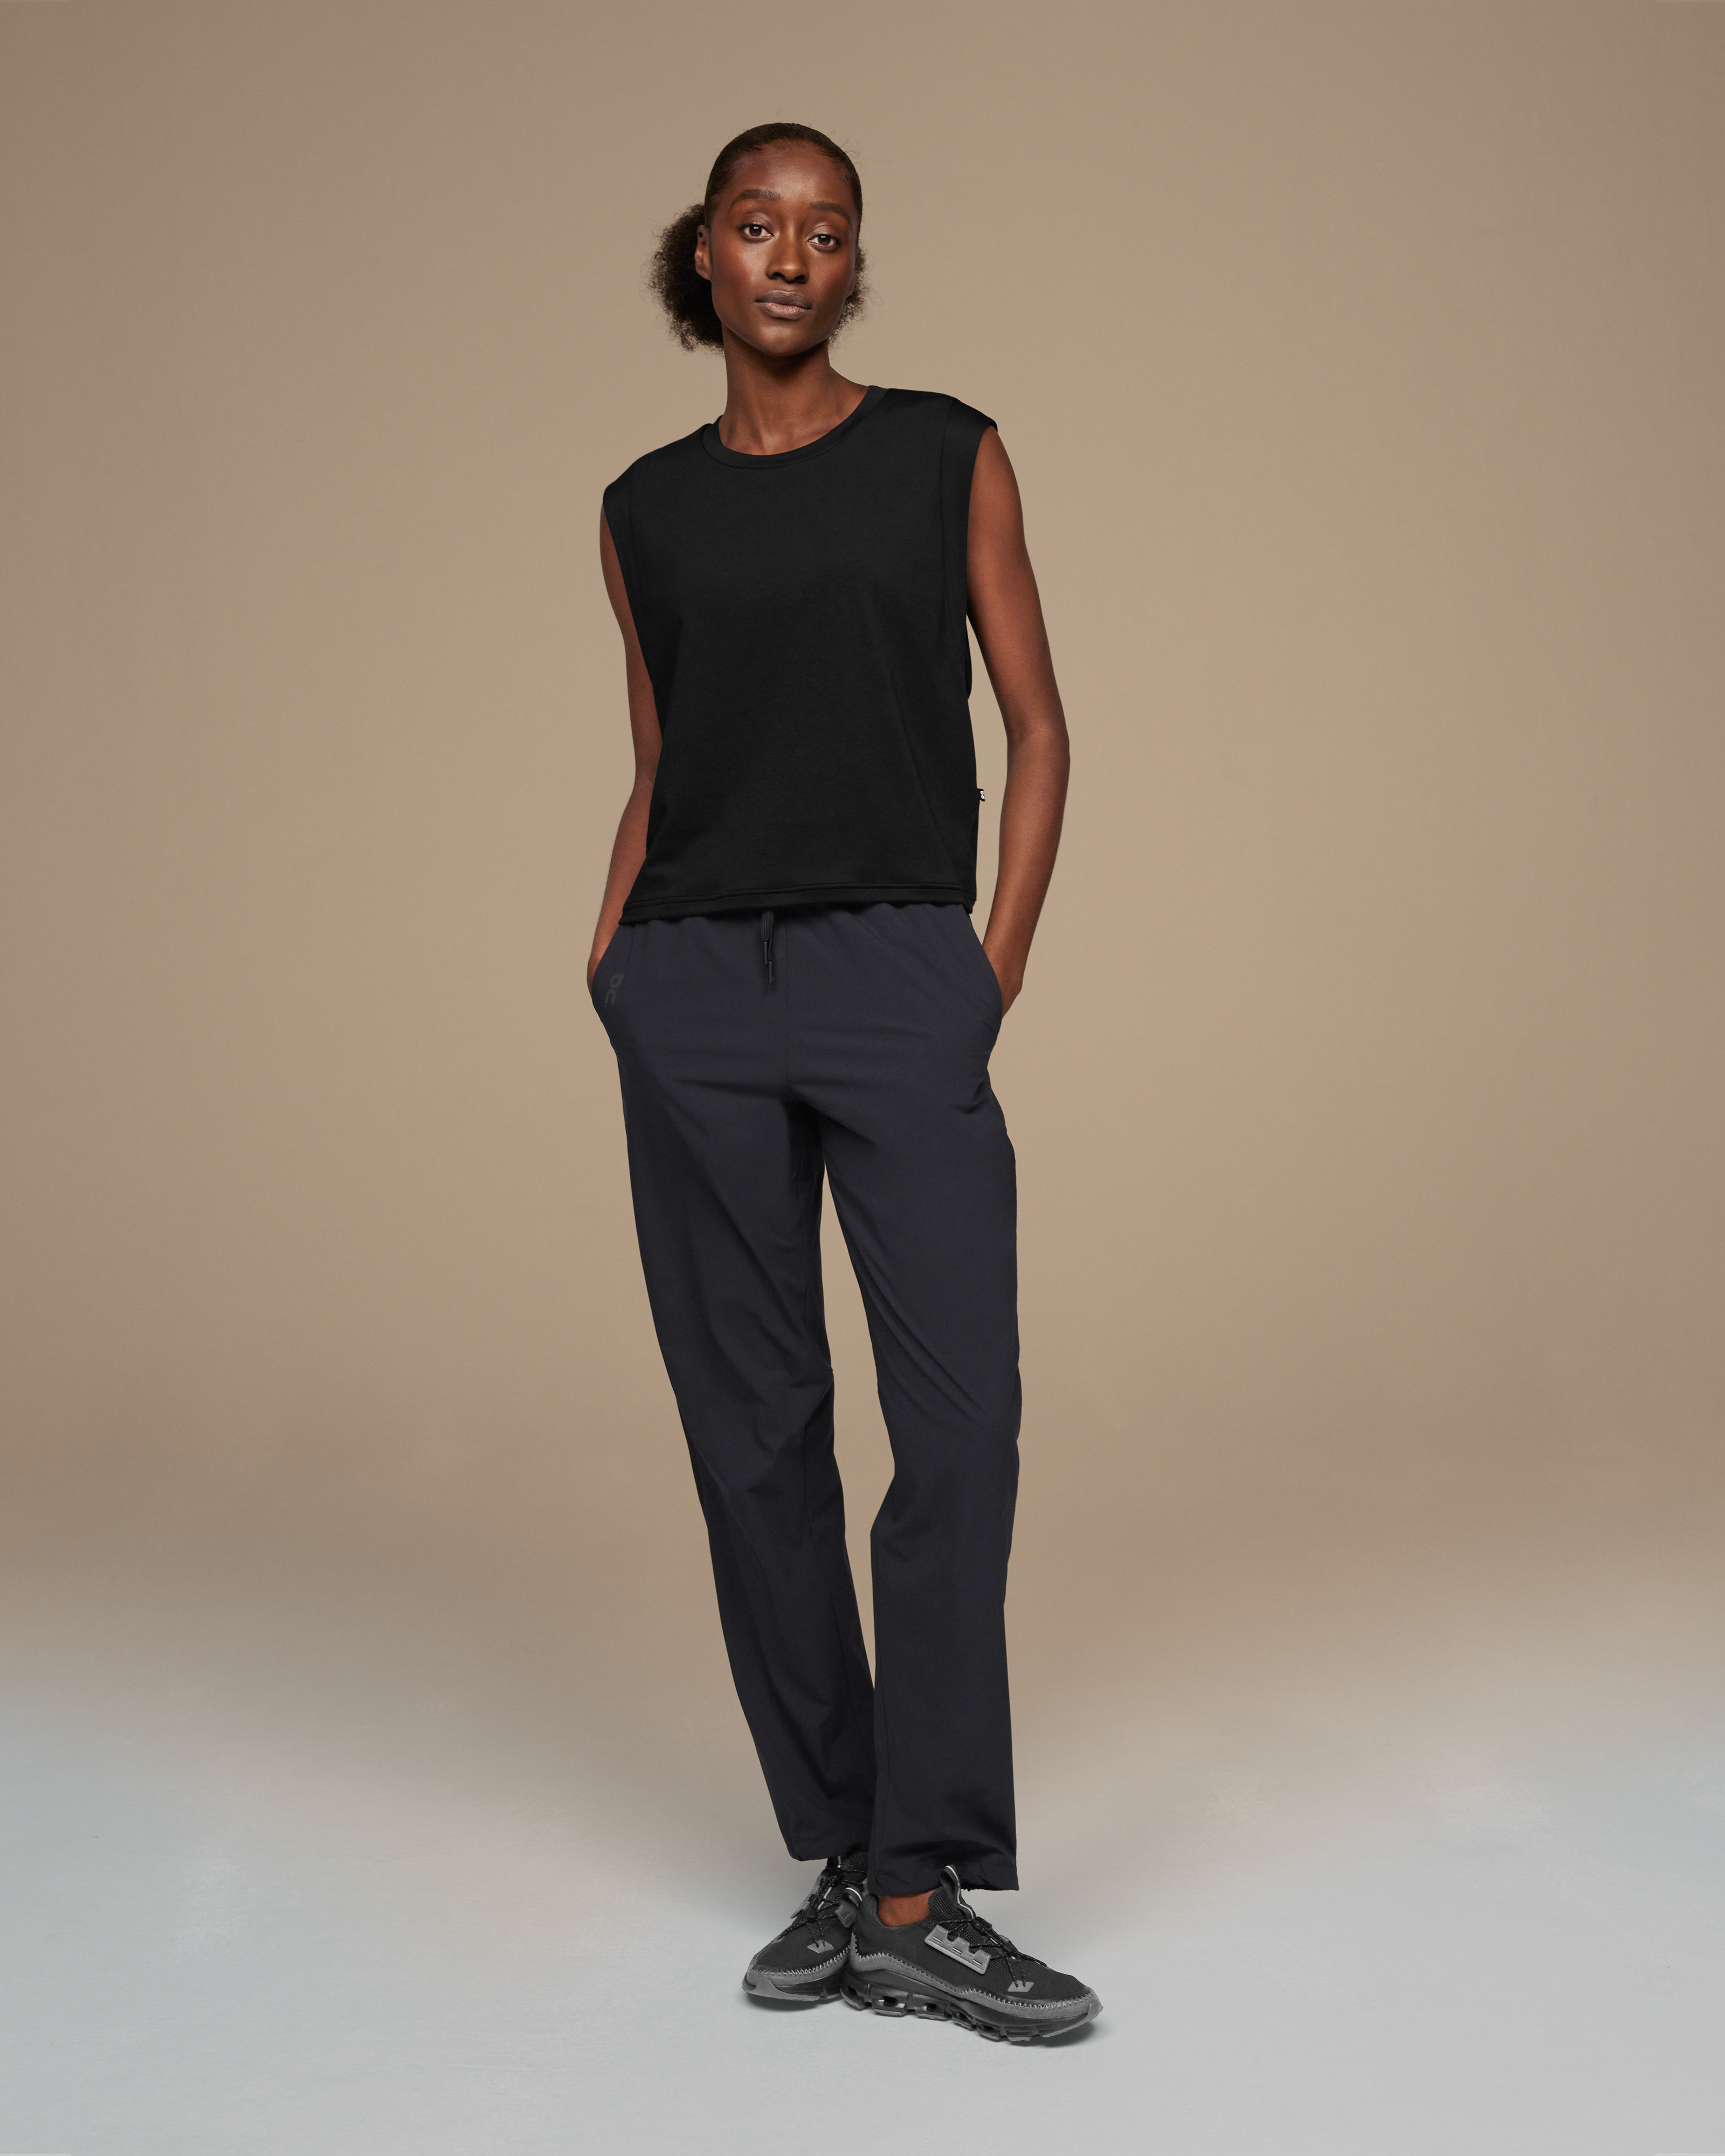 Cotton Track Pants For Women - Black, Women Track Pant